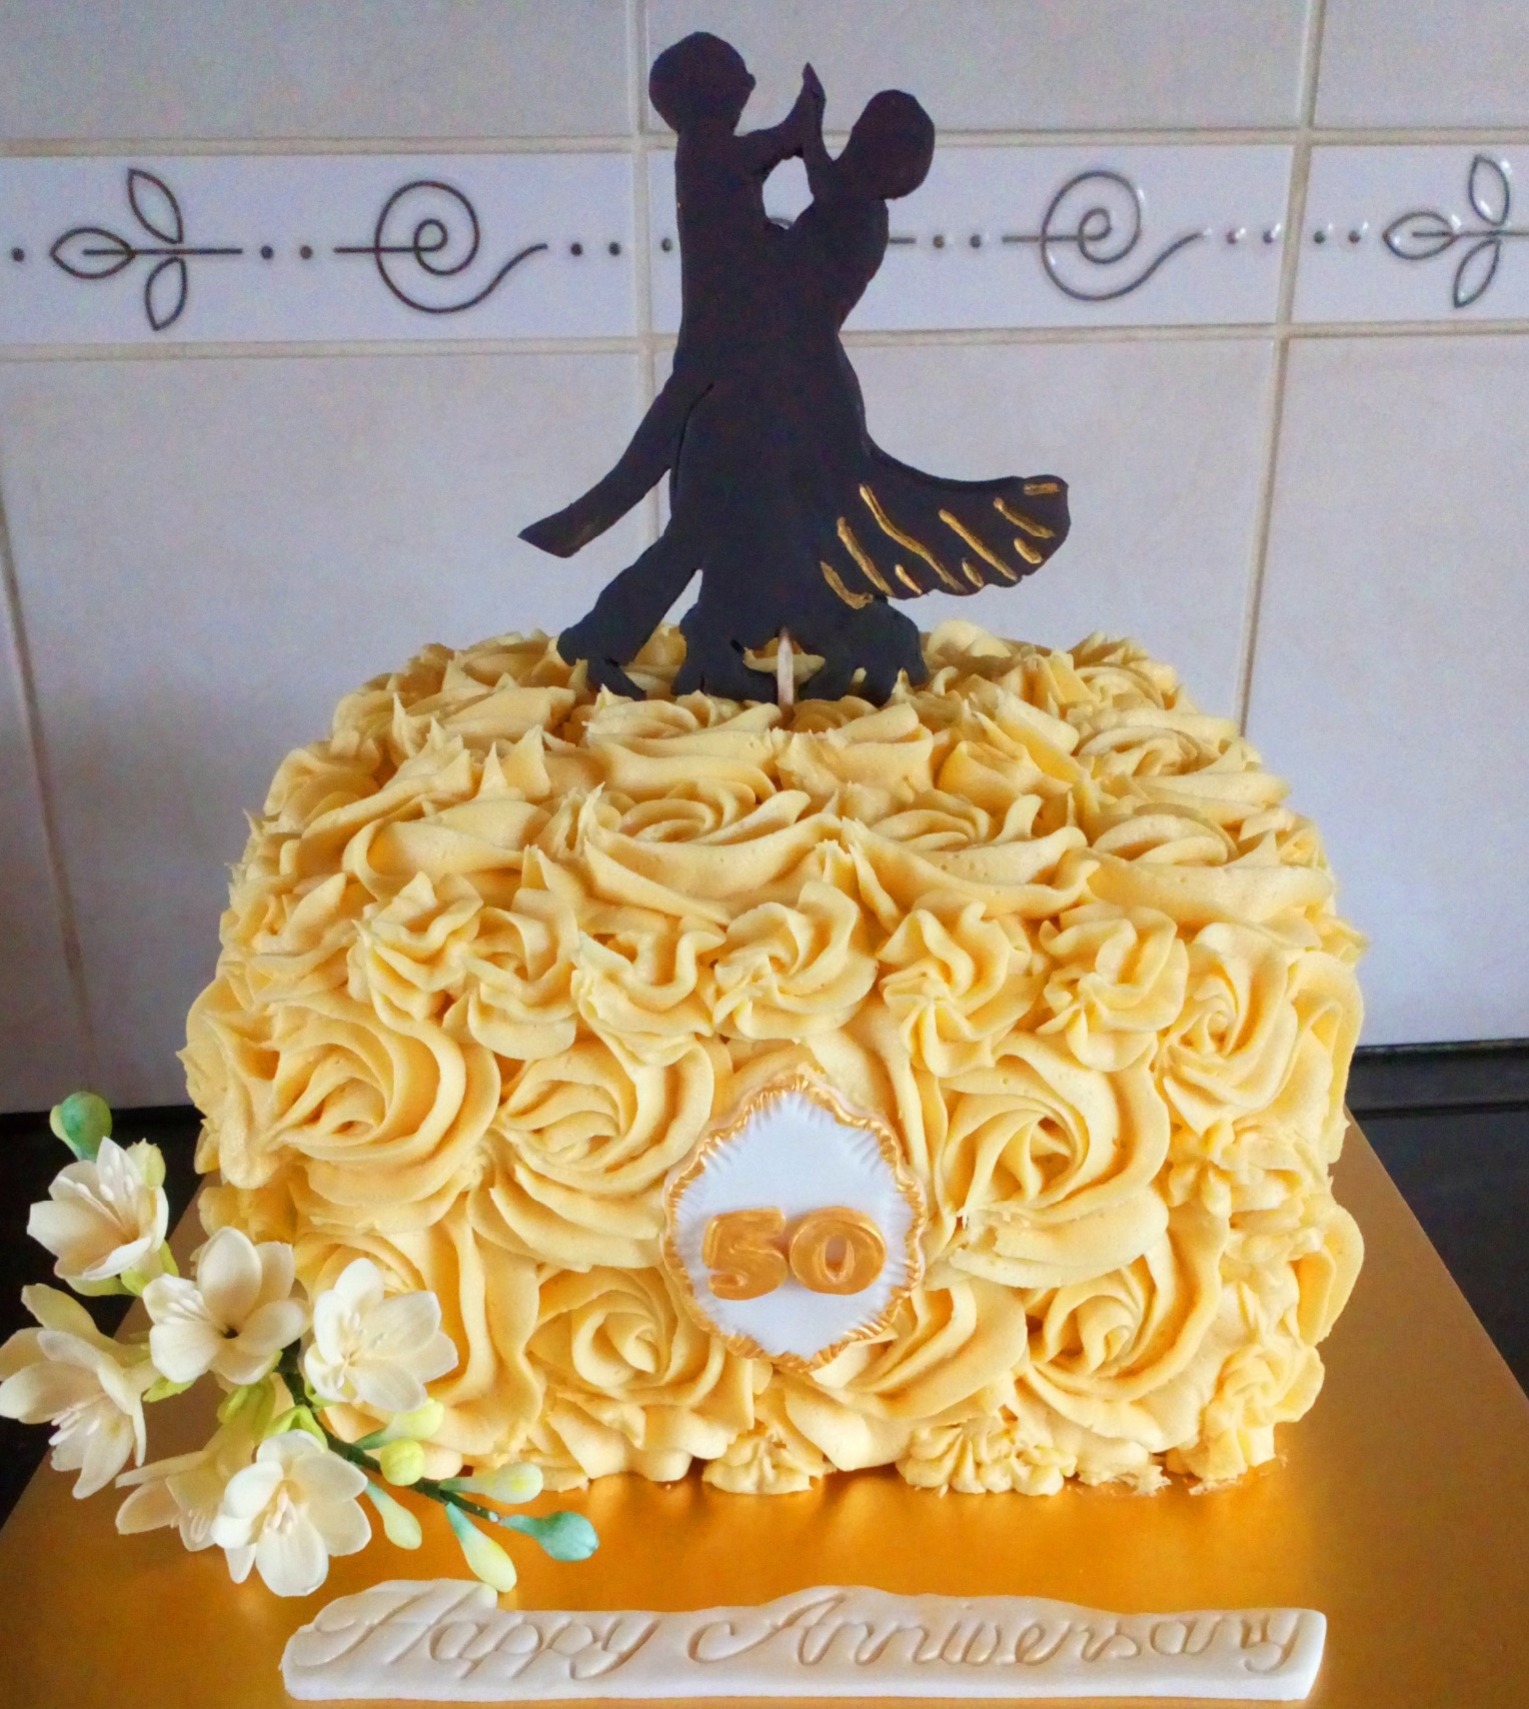 50th wedding anniversary buttercream swirl cake with ballroom dancers